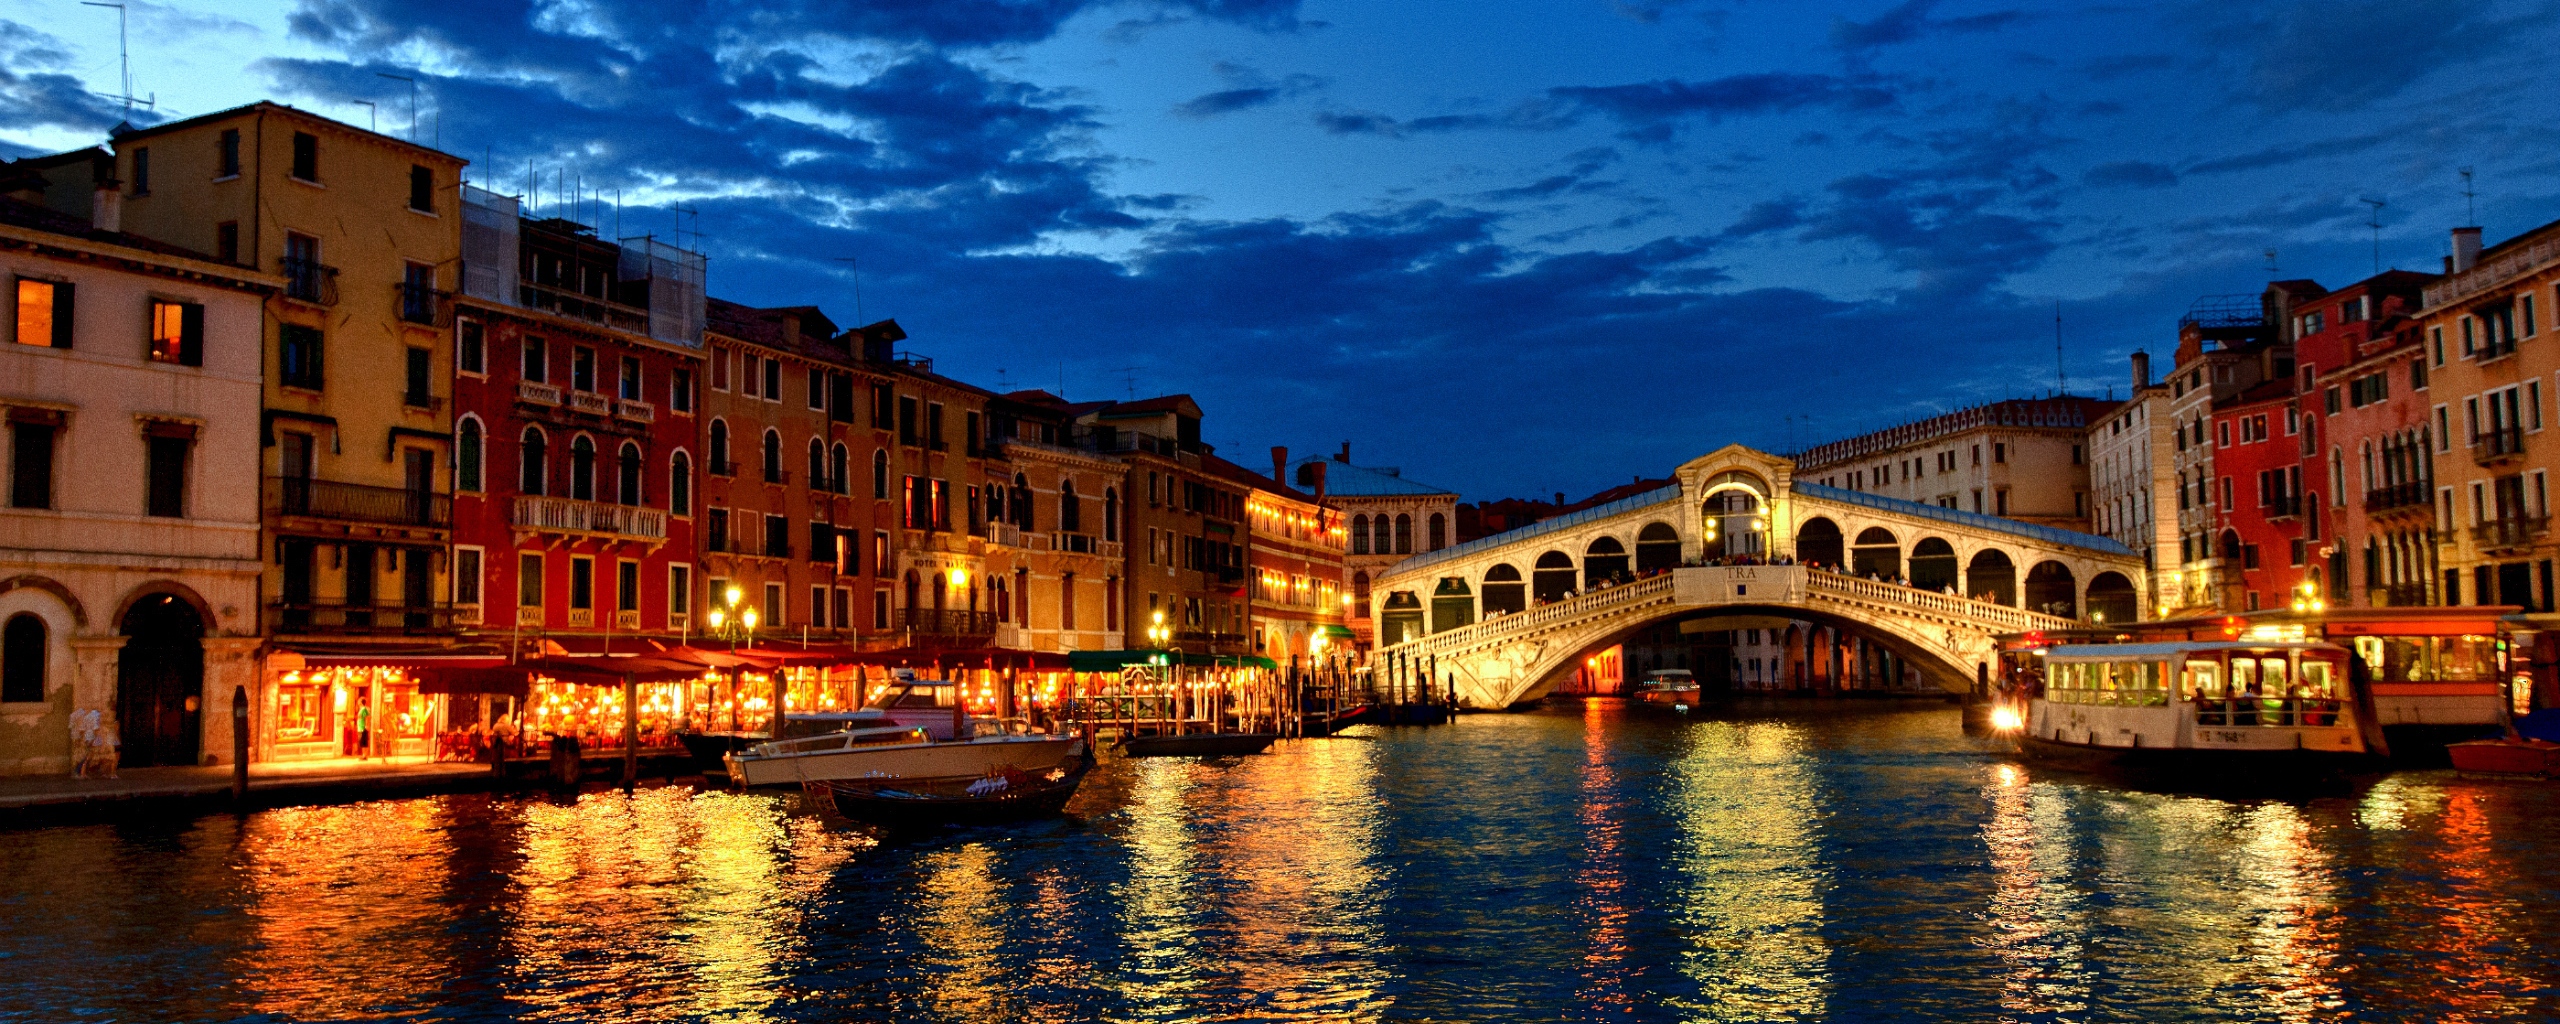 HD Venice Italy Wallpaper